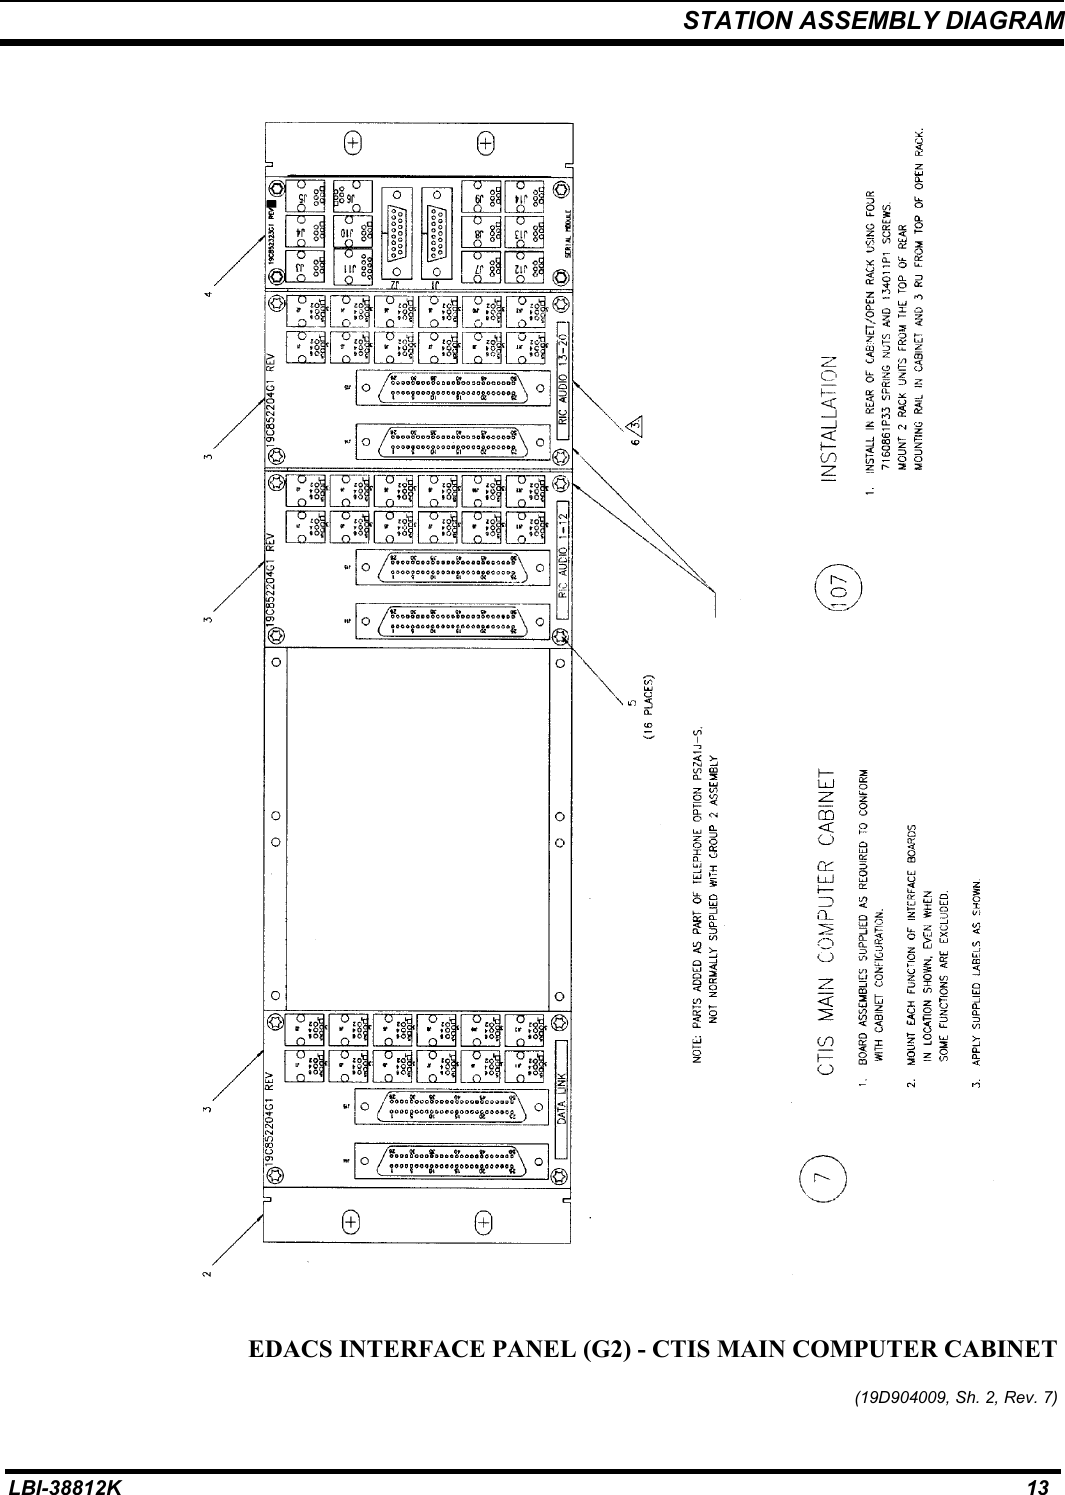 STATION ASSEMBLY DIAGRAMLBI-38812K 13EDACS INTERFACE PANEL (G2) - CTIS MAIN COMPUTER CABINET(19D904009, Sh. 2, Rev. 7)